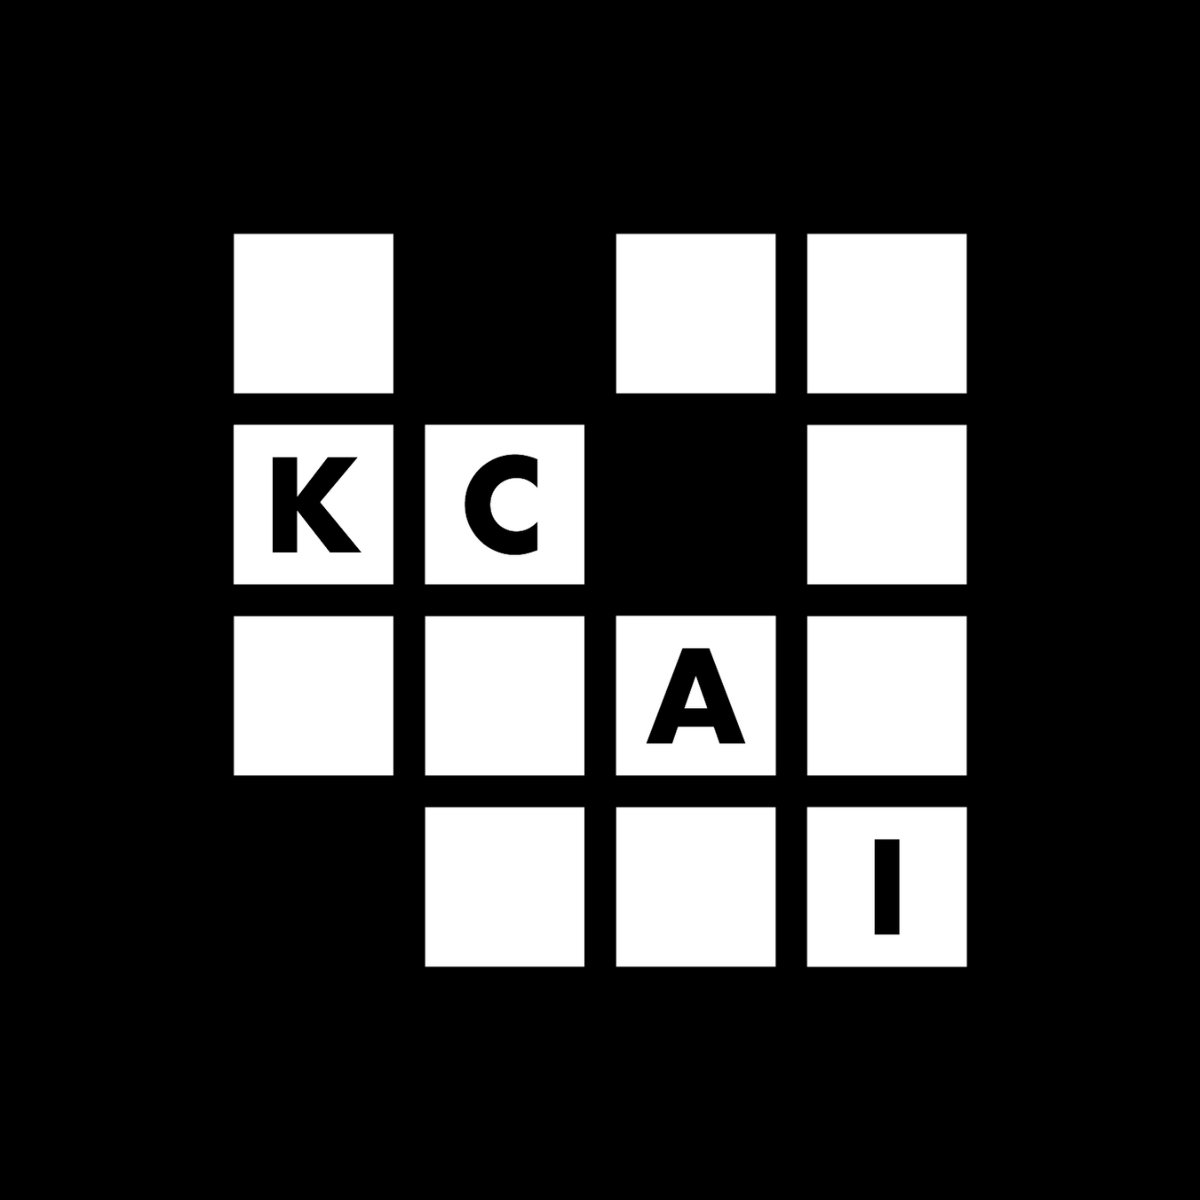 KCAI Logo Square